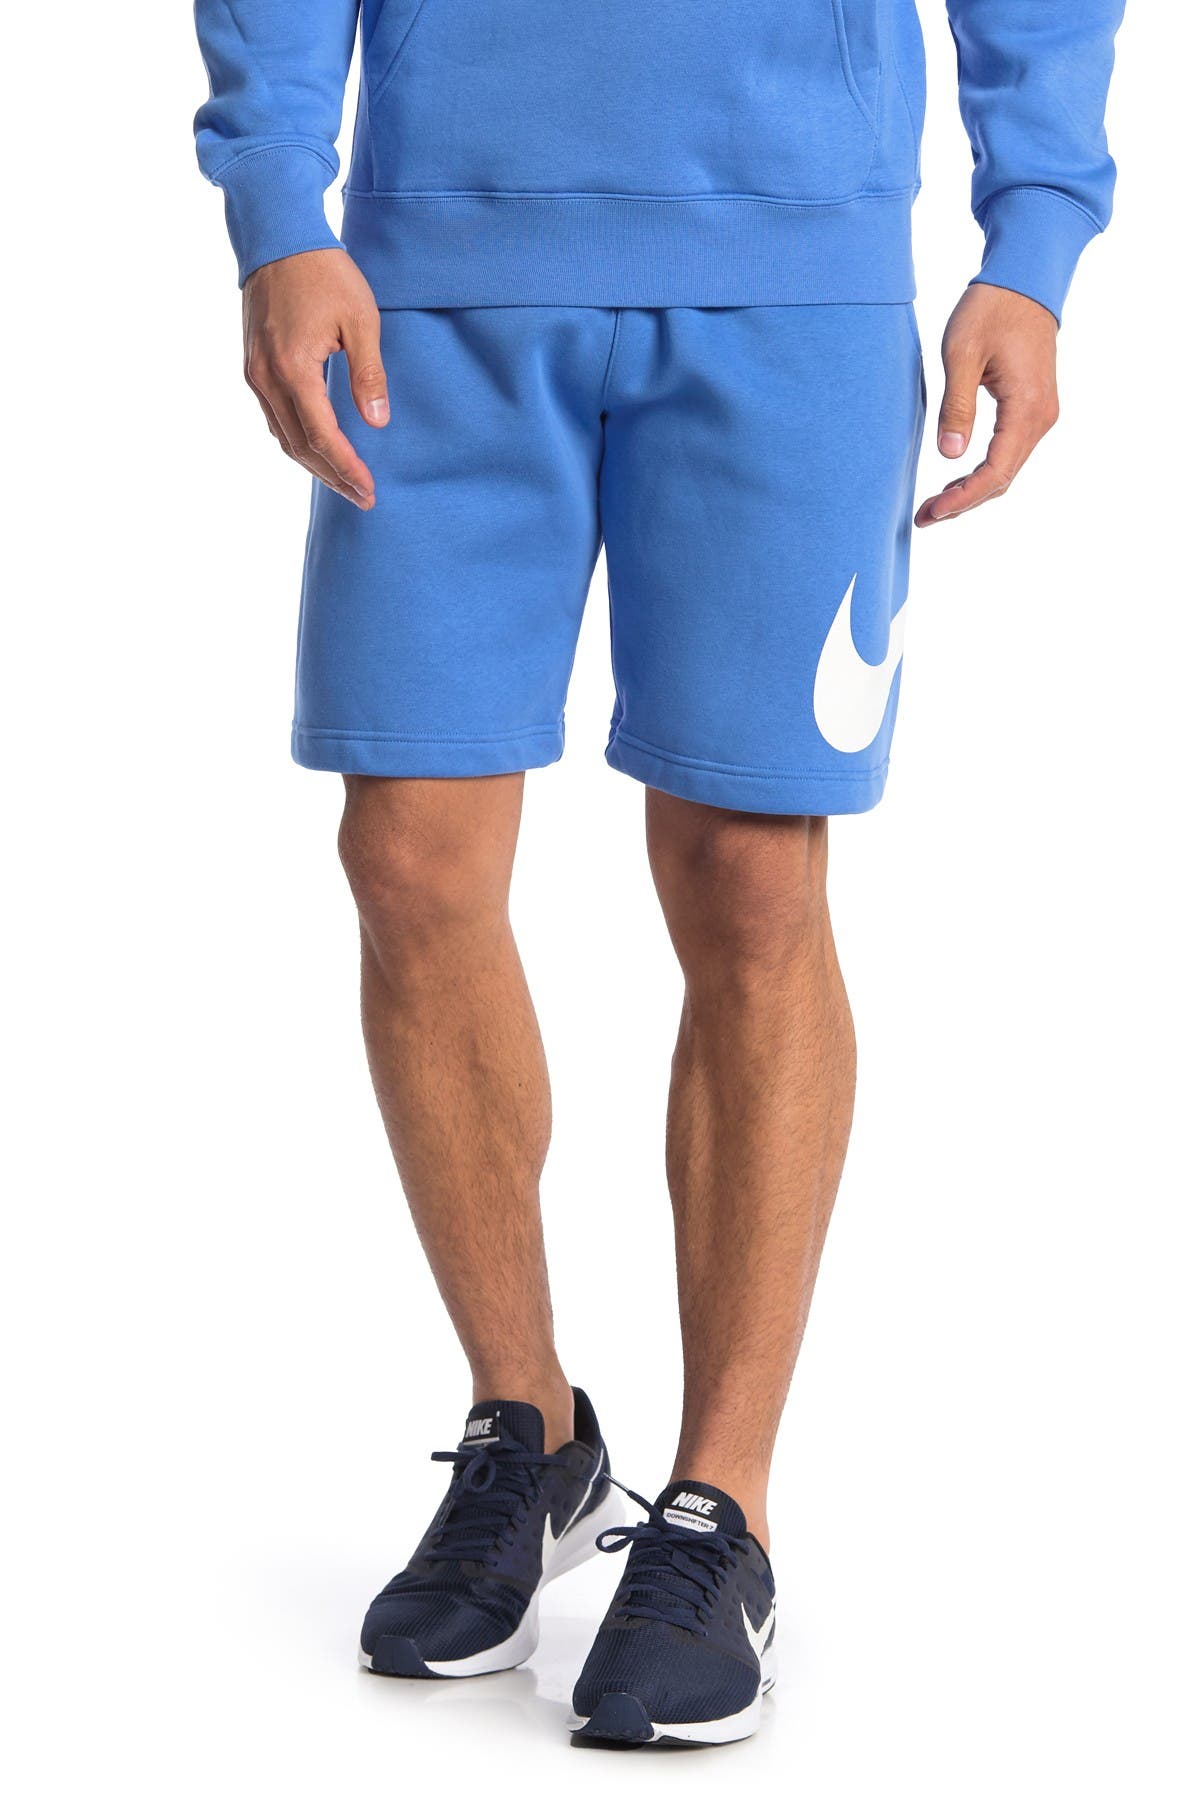 nordstrom rack nike shorts